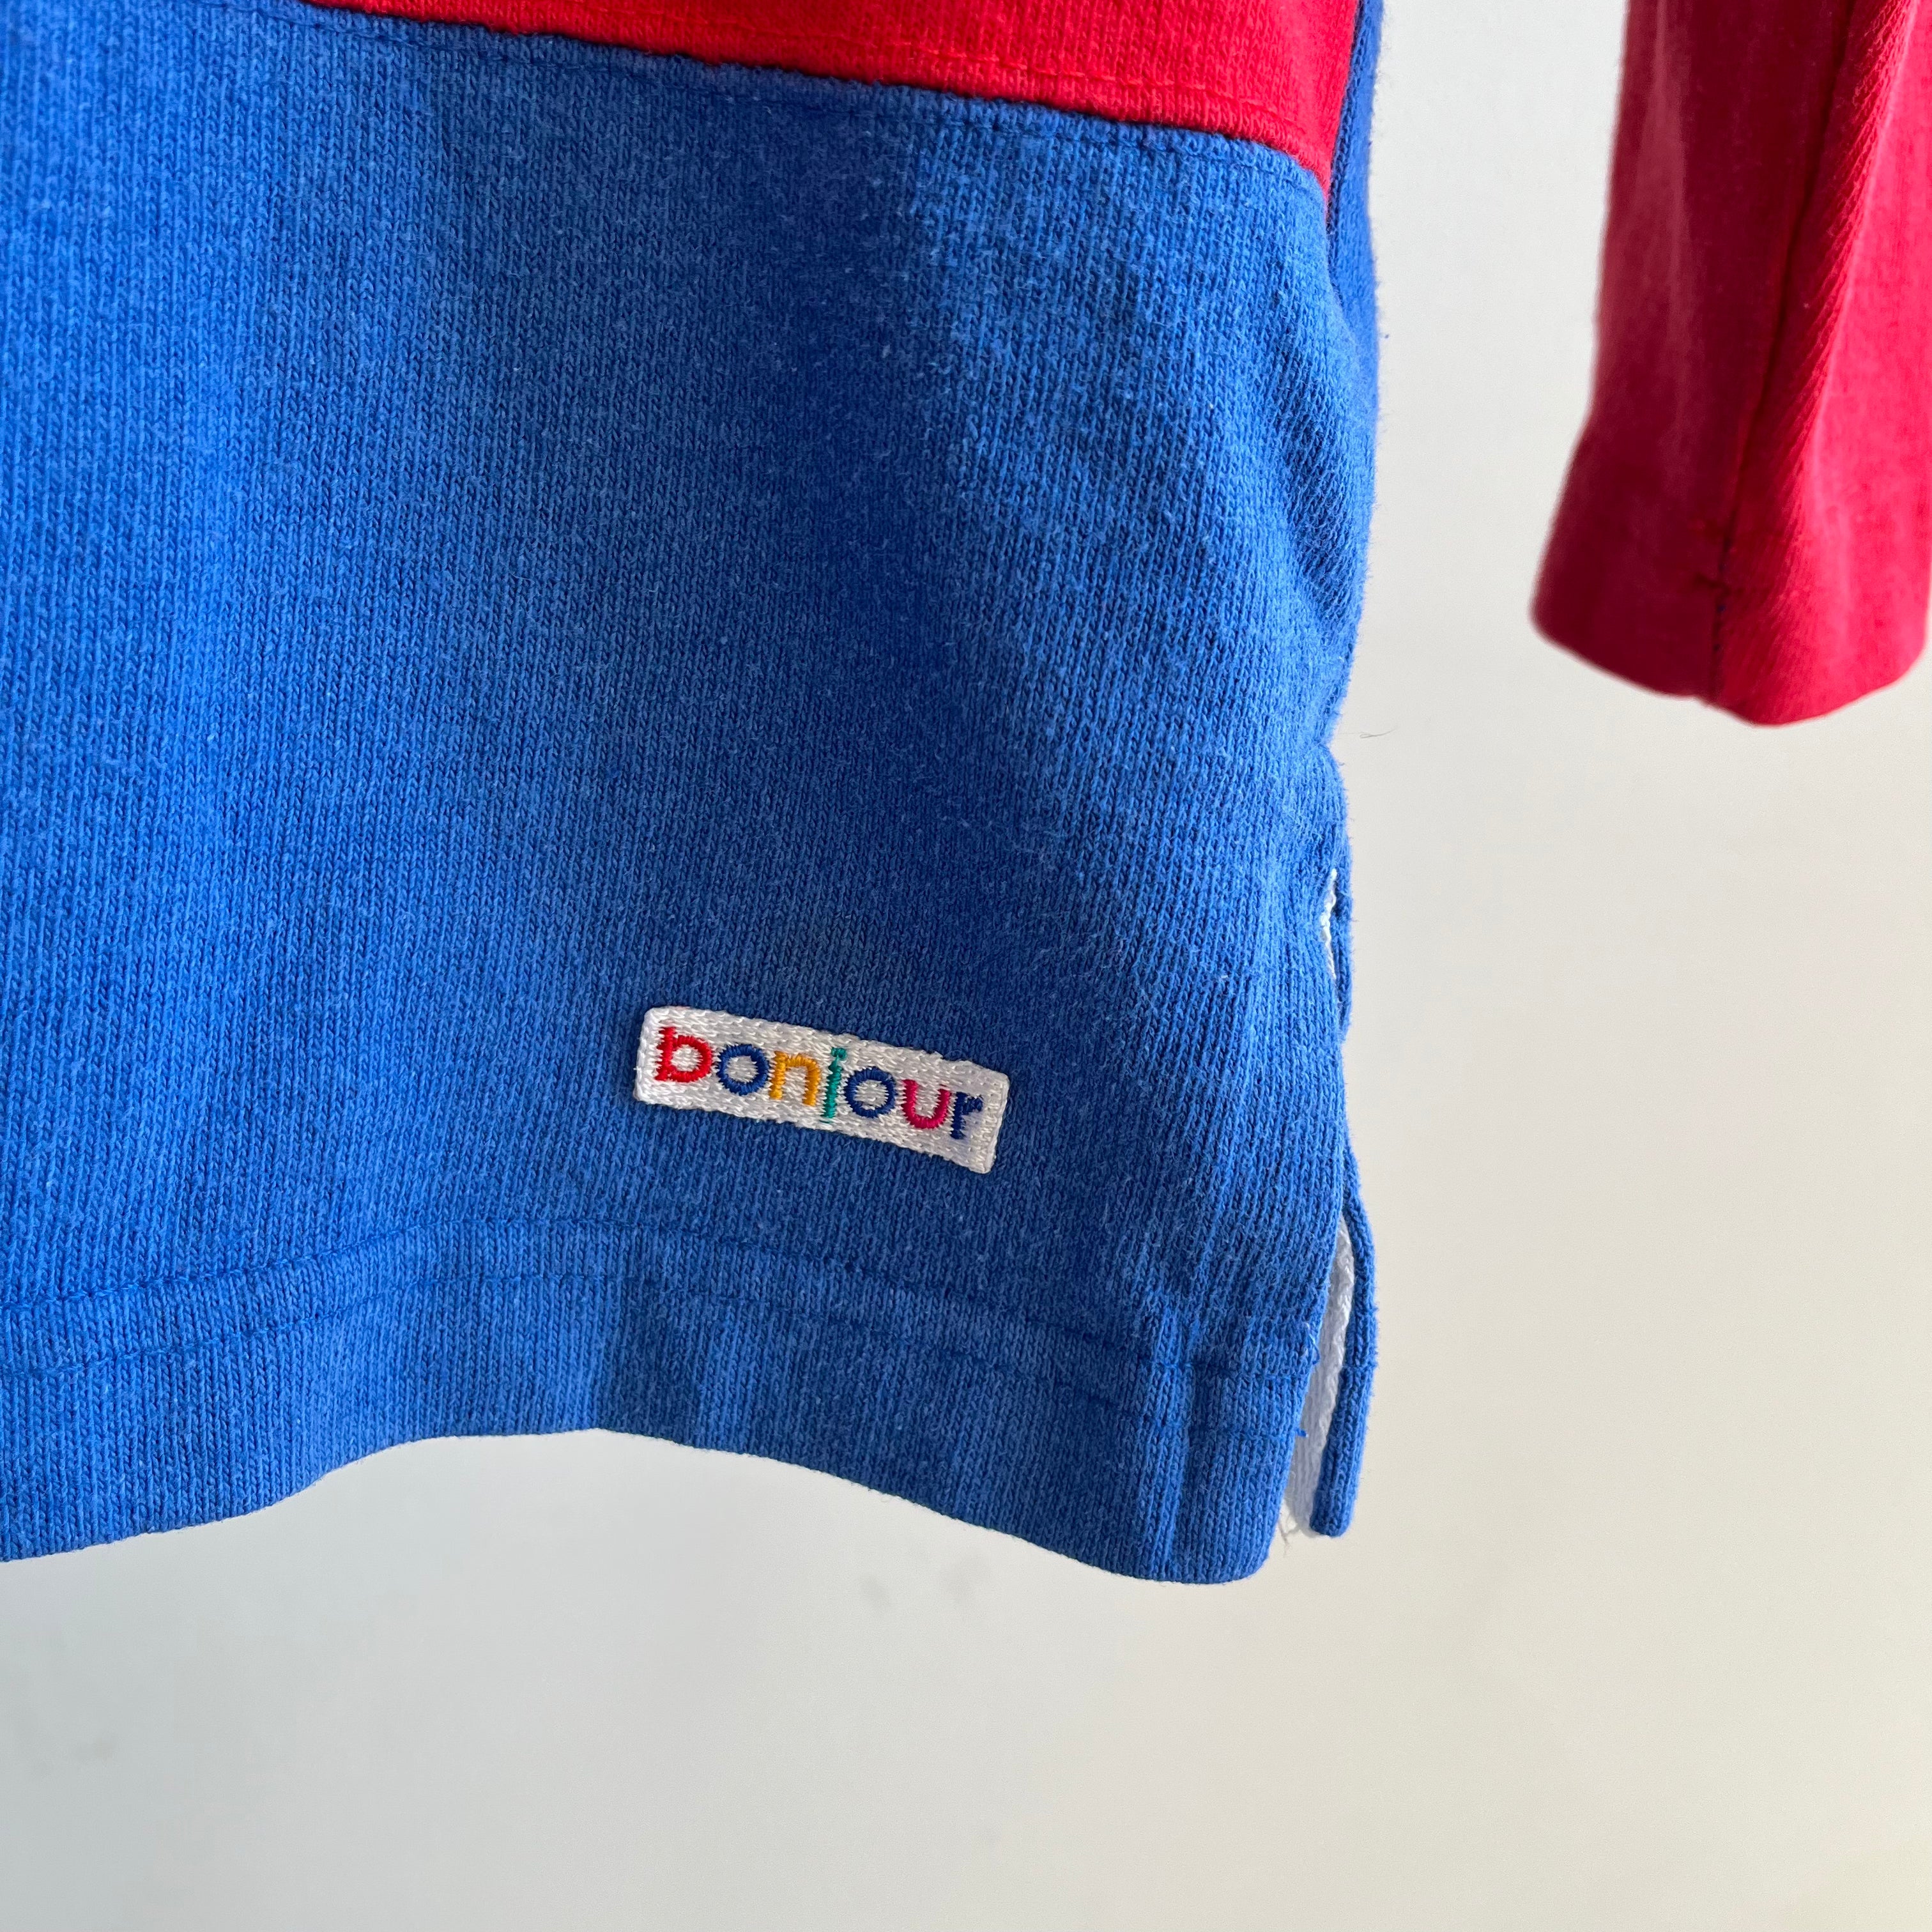 1980s Bonjour Brand Color Block Heavyweight Mock Neck Long Sleeve Shirt - Shoulder Pads!